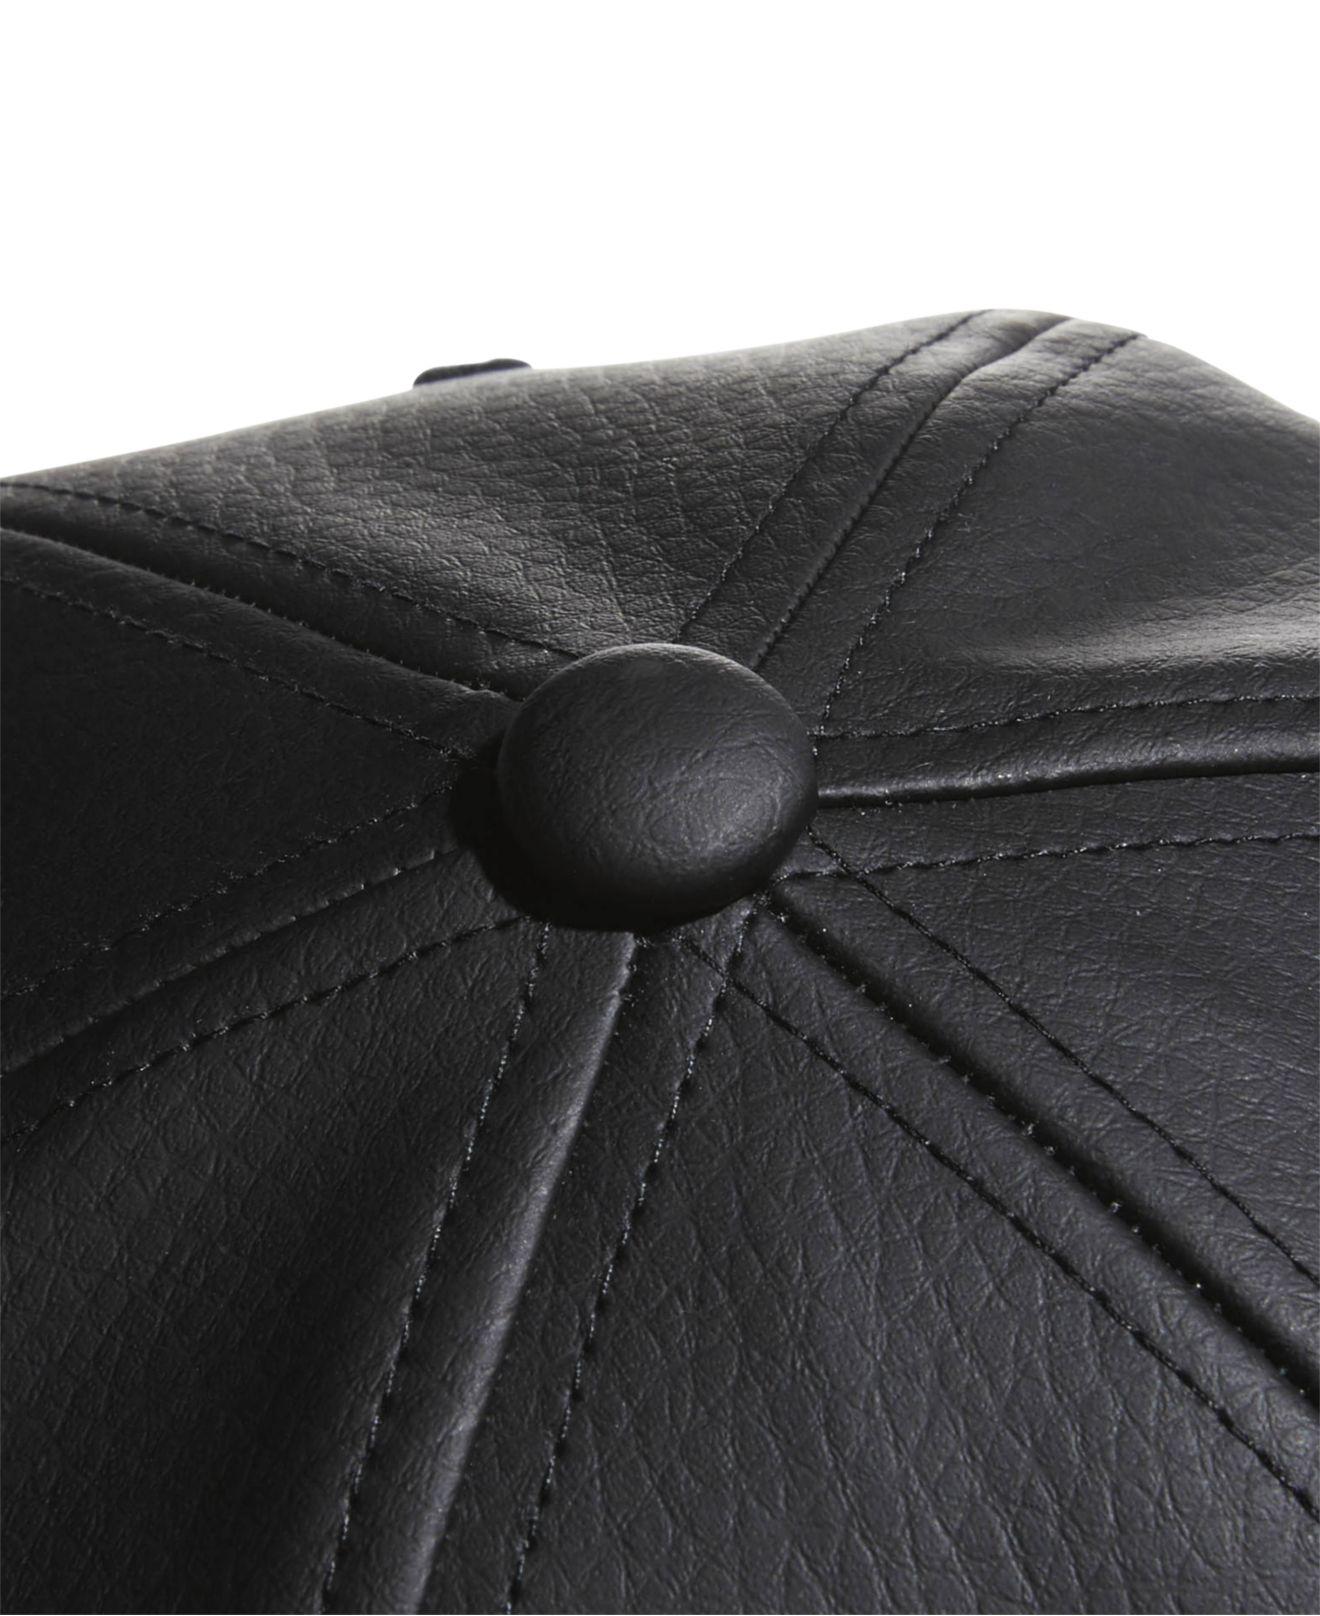 adidas Originals Faux-leather Metallic-logo Hat in Black/Gold Leather (Black)  for Men | Lyst